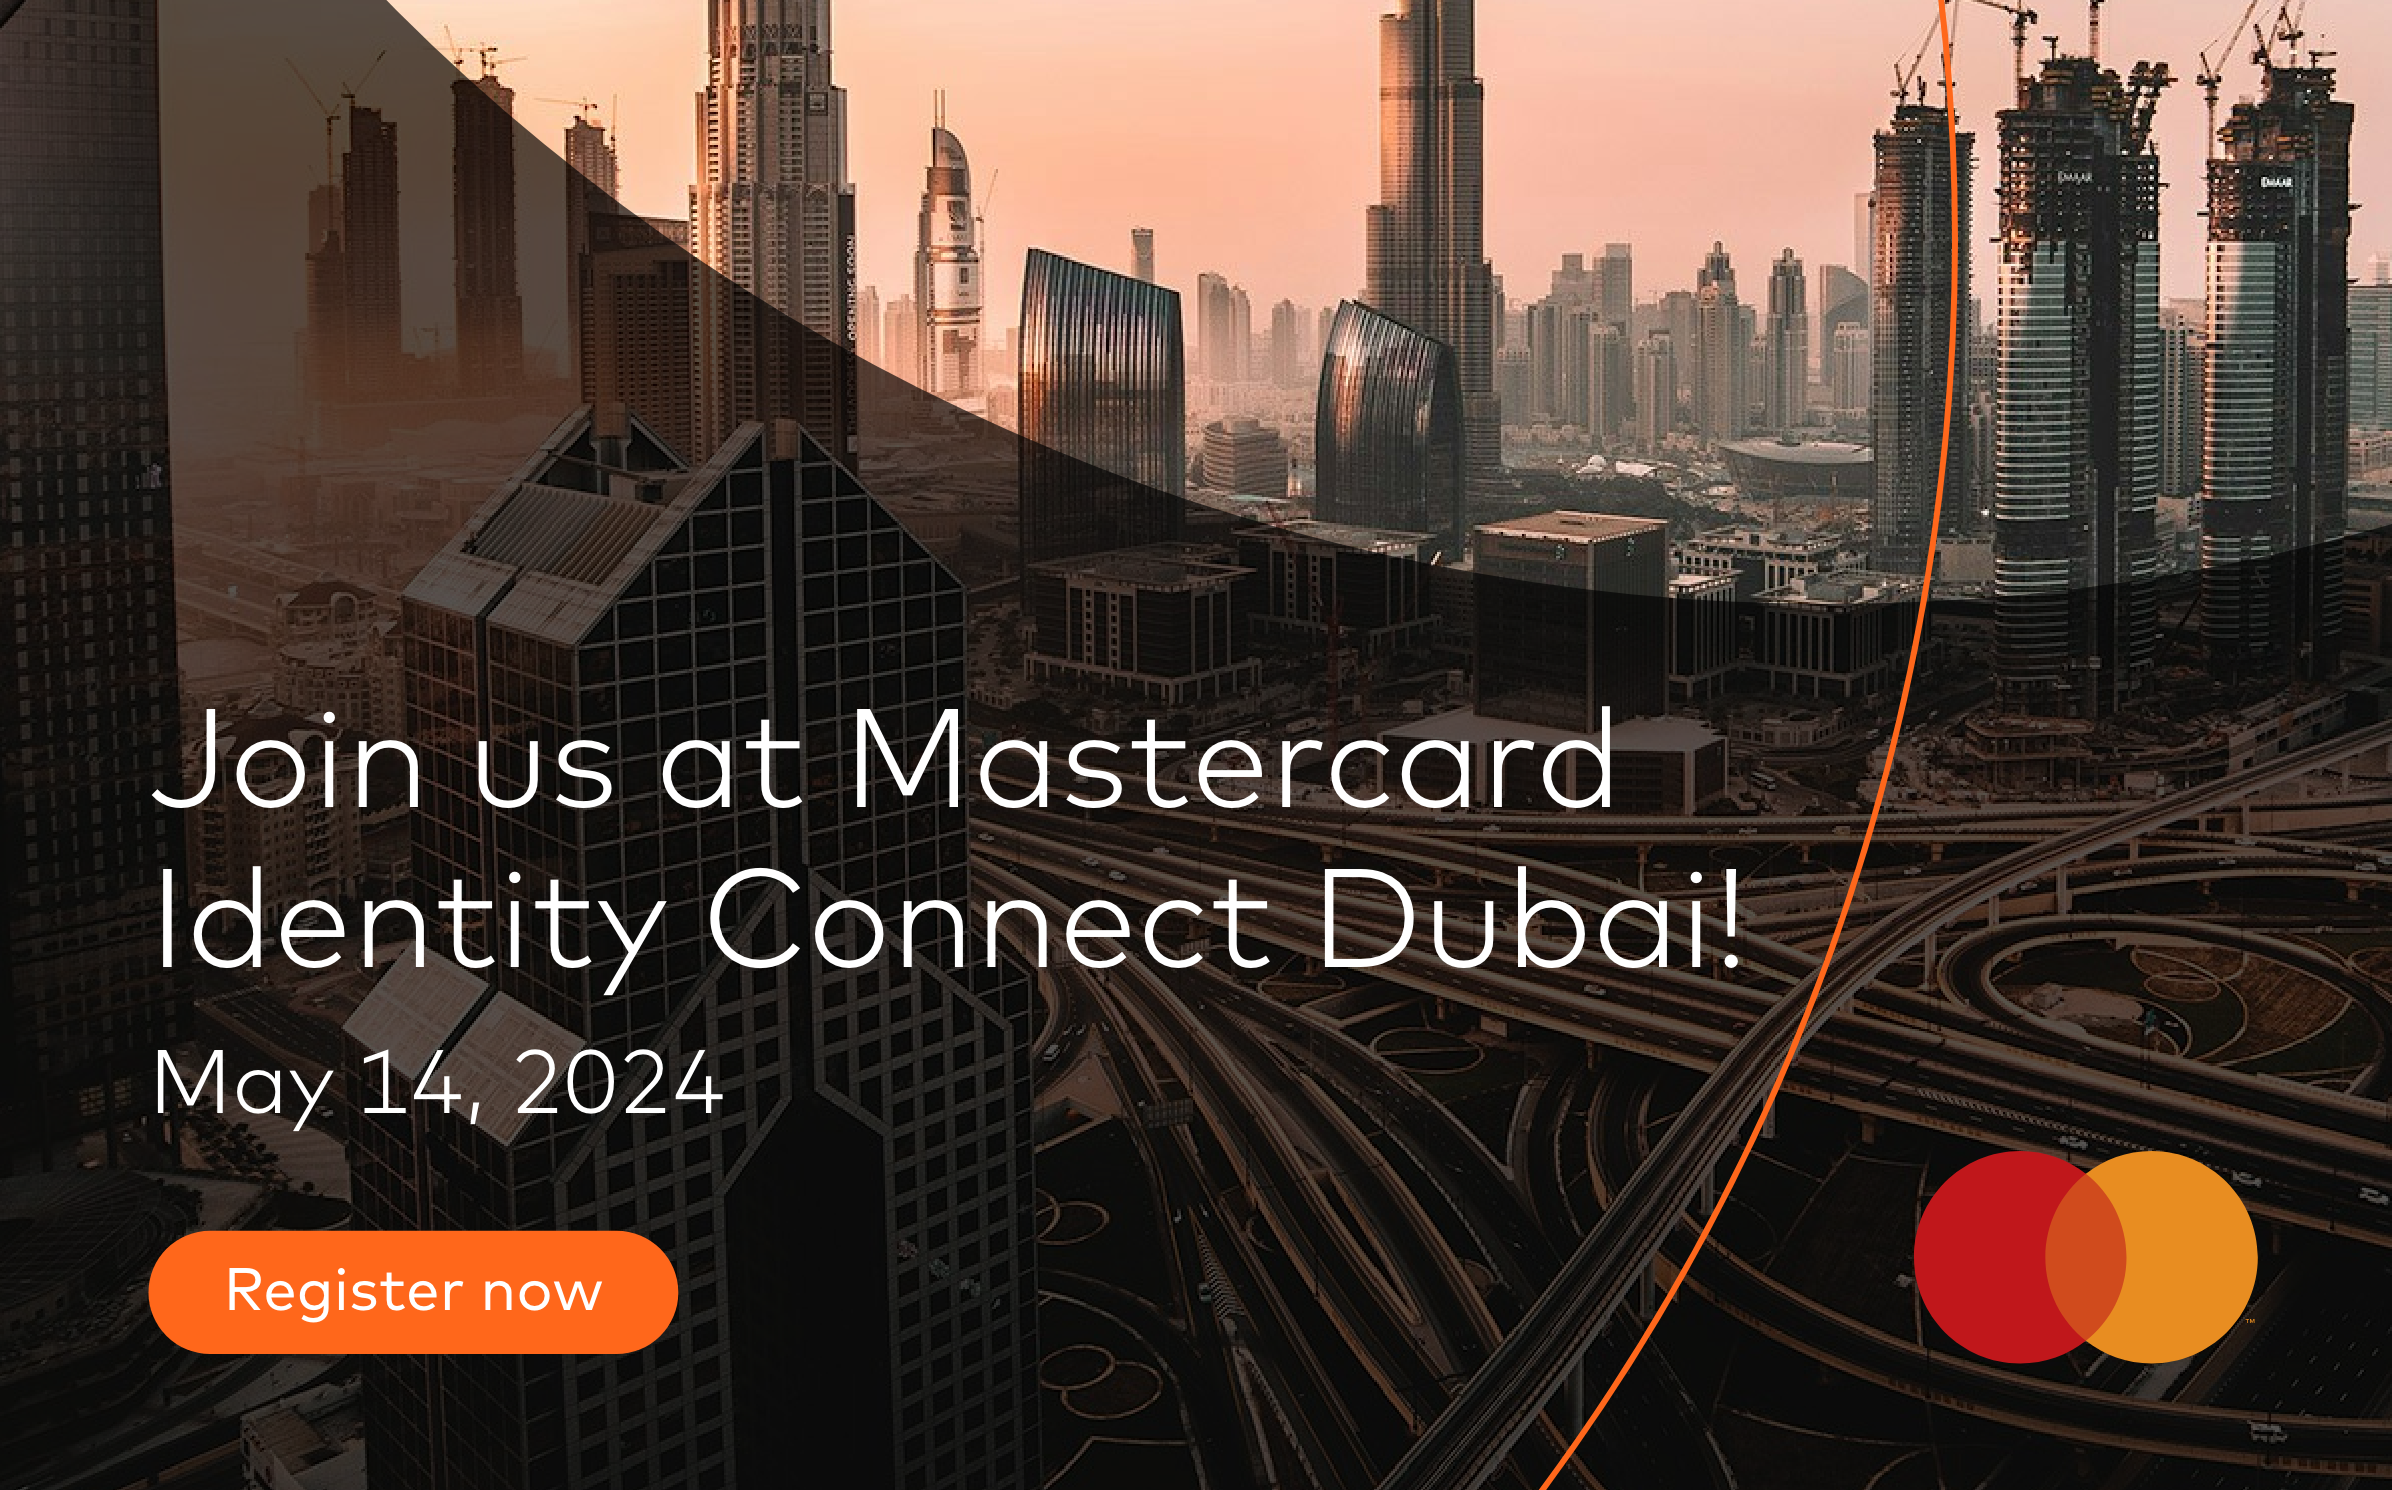 Join us at Mastercard Identity Connect Dubai - Social Post - 1200x400_Fszt